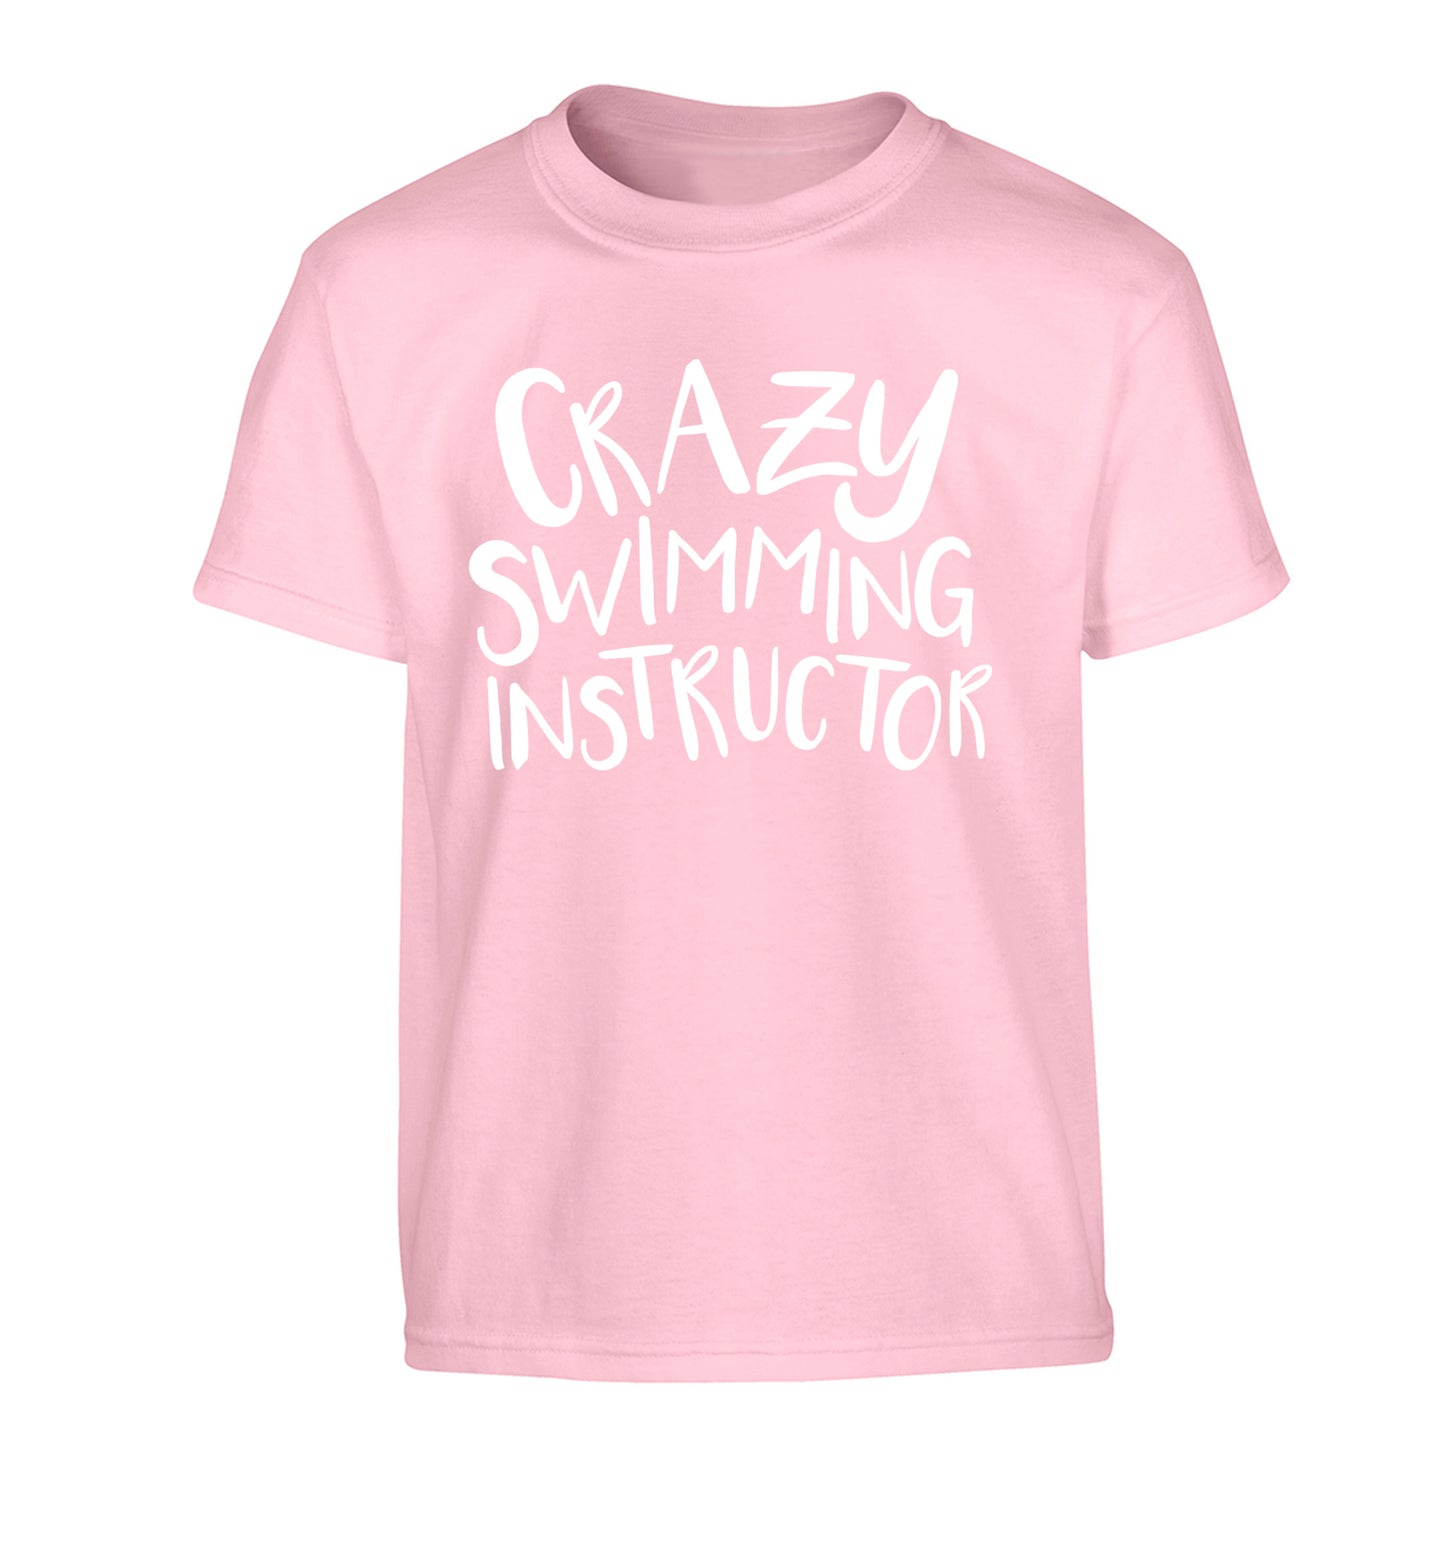 Crazy swimming instructor Children's light pink Tshirt 12-13 Years